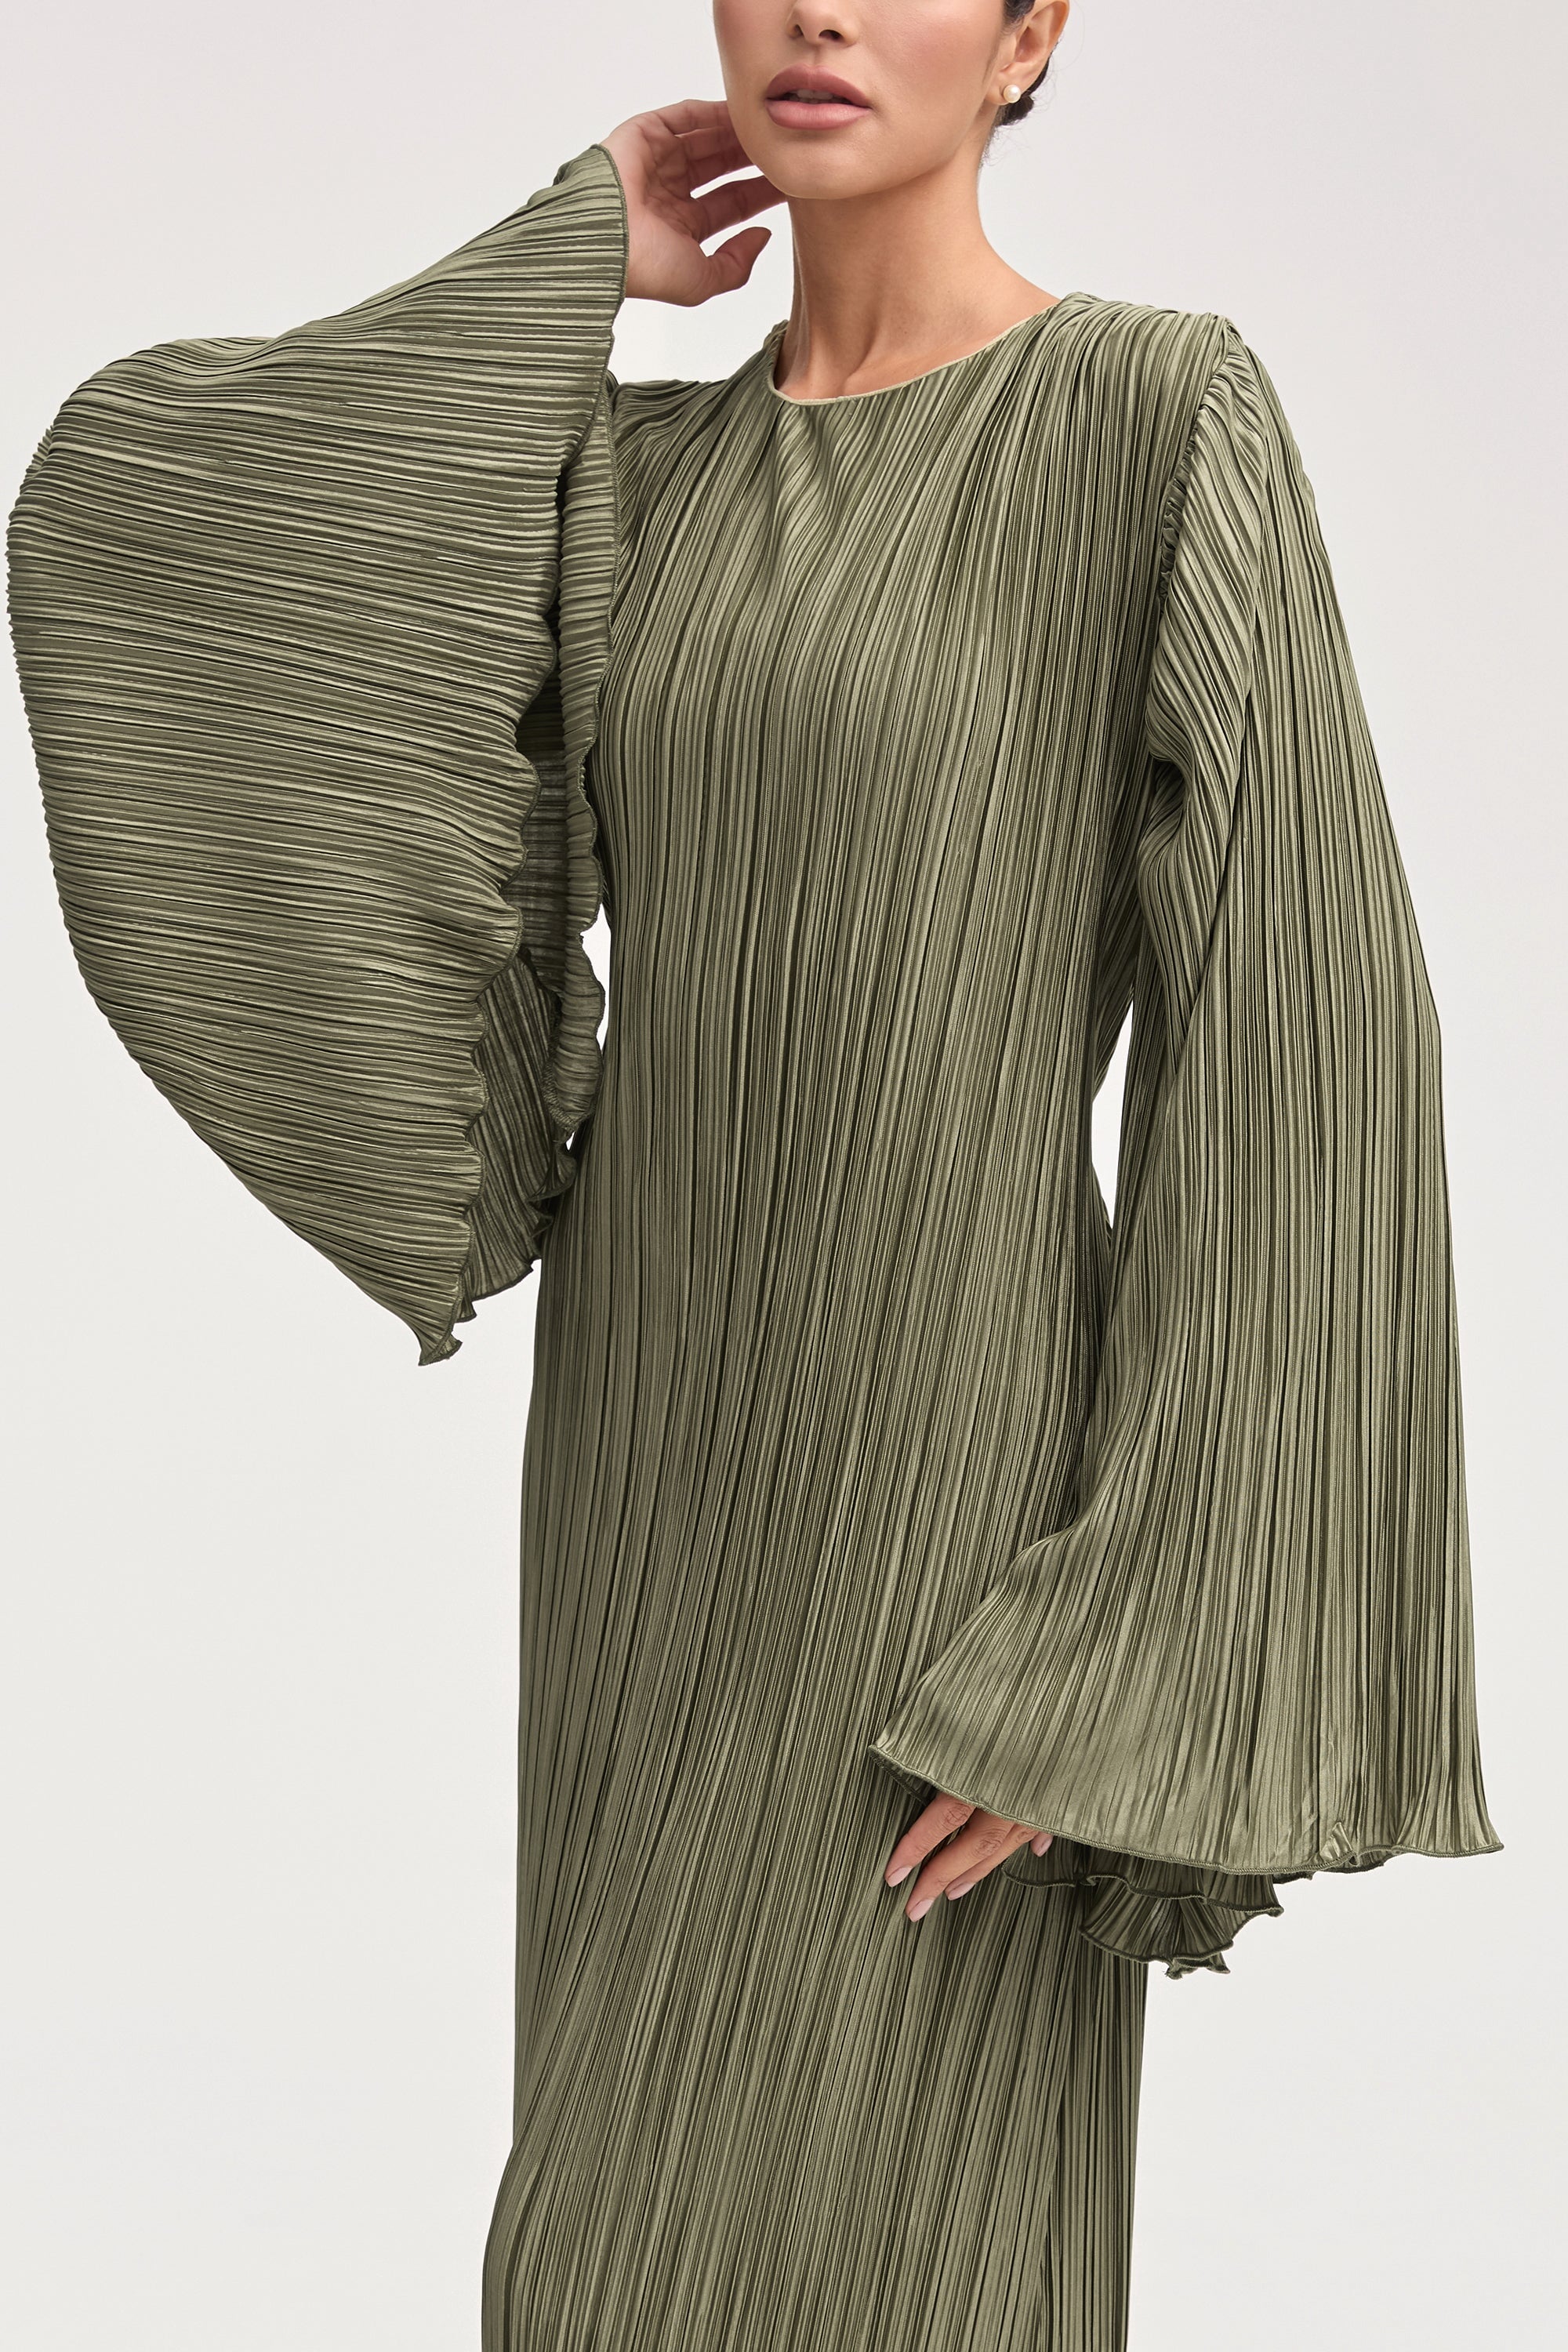 Camille Satin Plisse Maxi Dress - Sage Clothing Veiled 